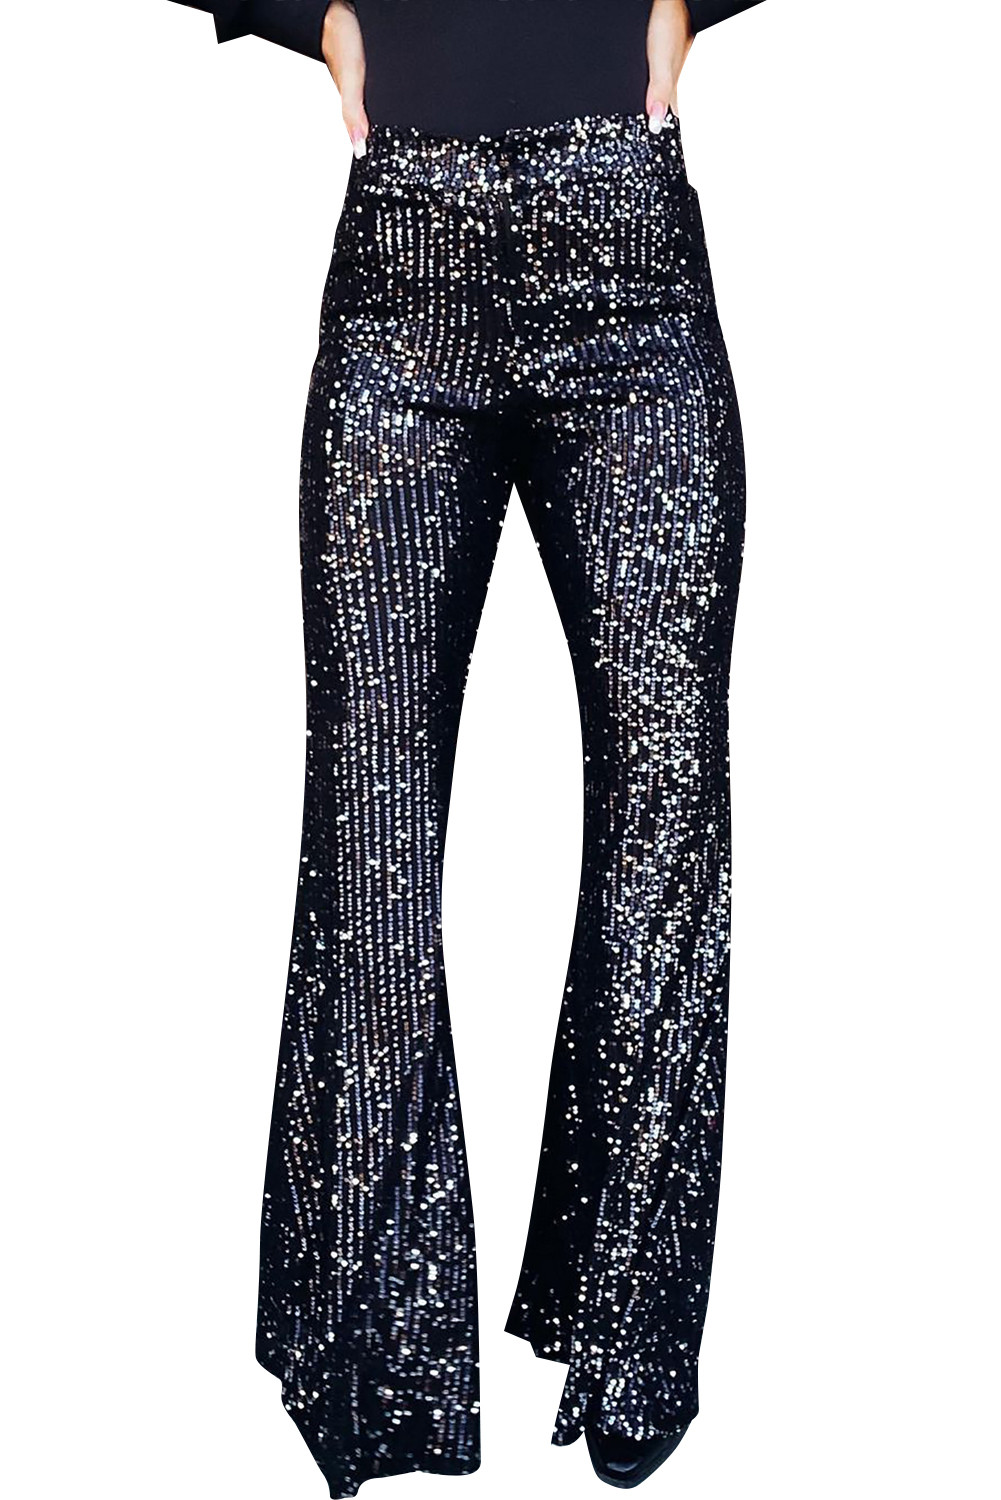 US$15.98 Black Sequin Full Length Flare Pants Wholesale Online